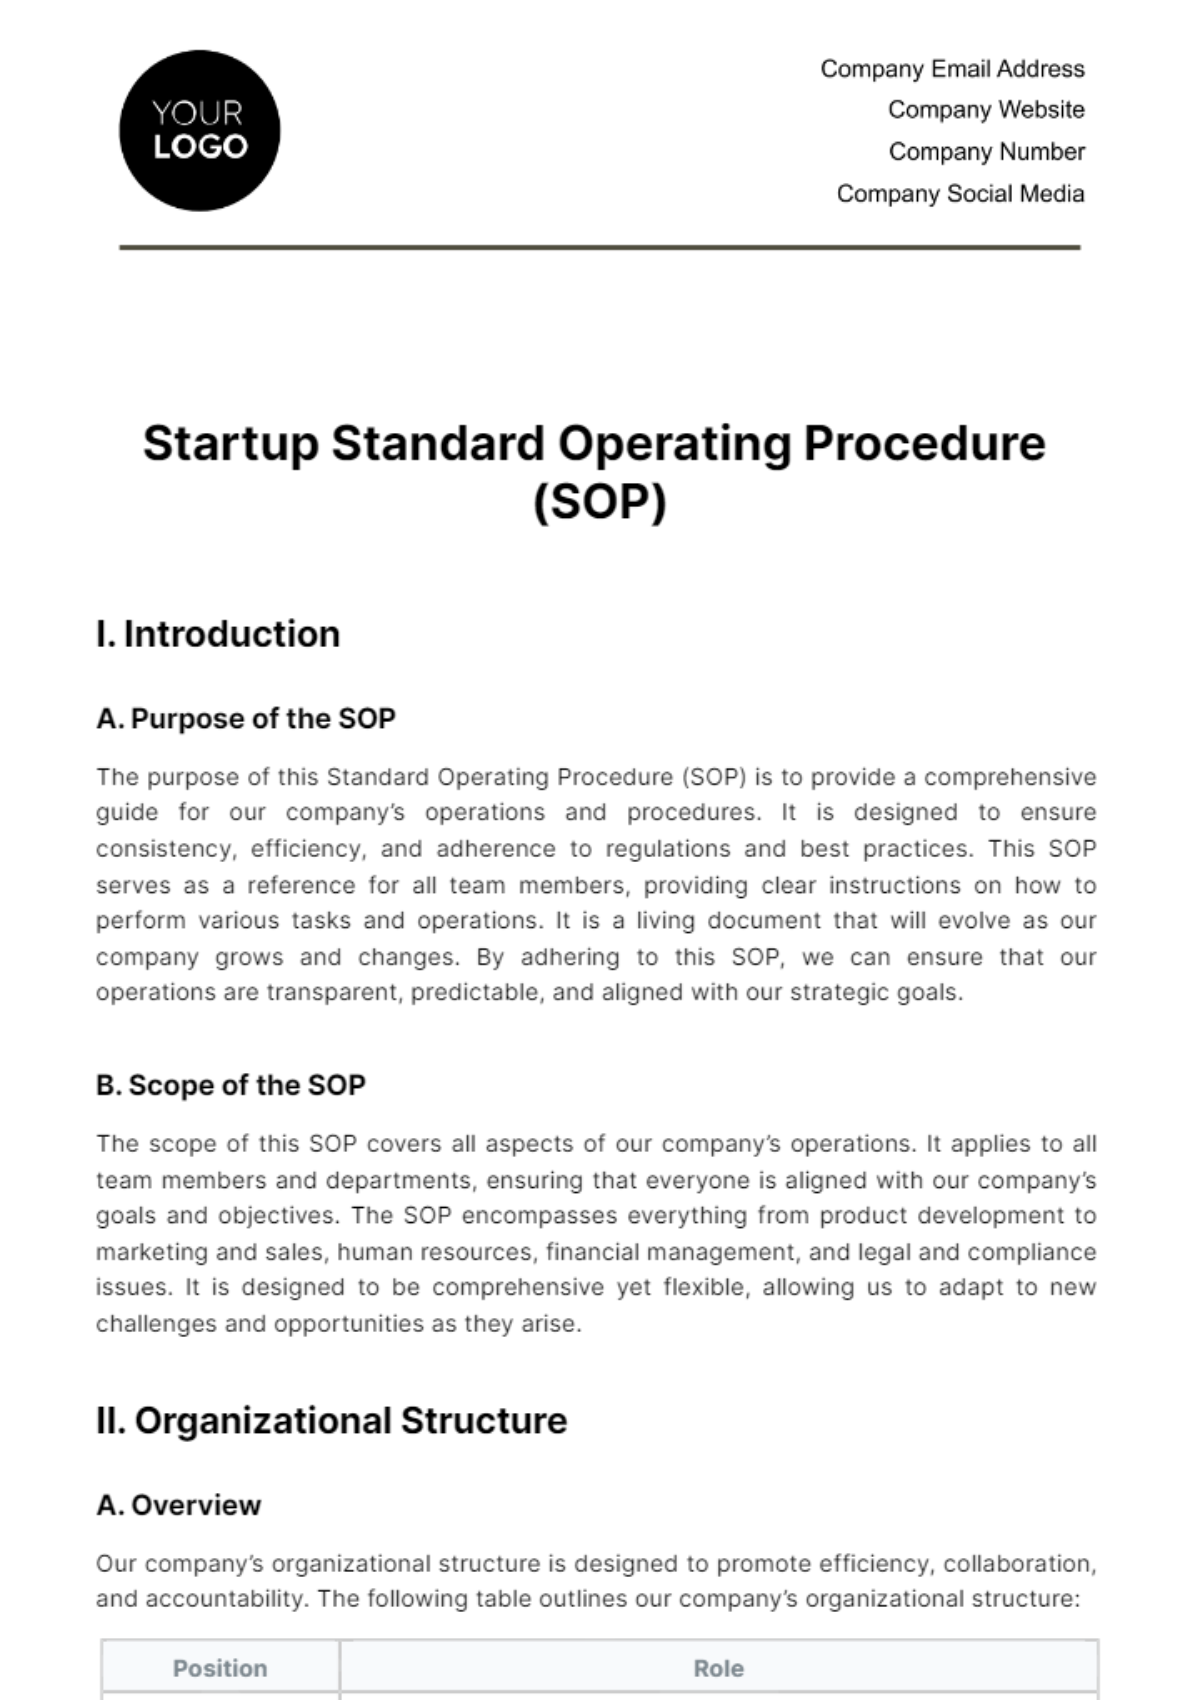 Startup Standard Operating Procedure (SOP) Template